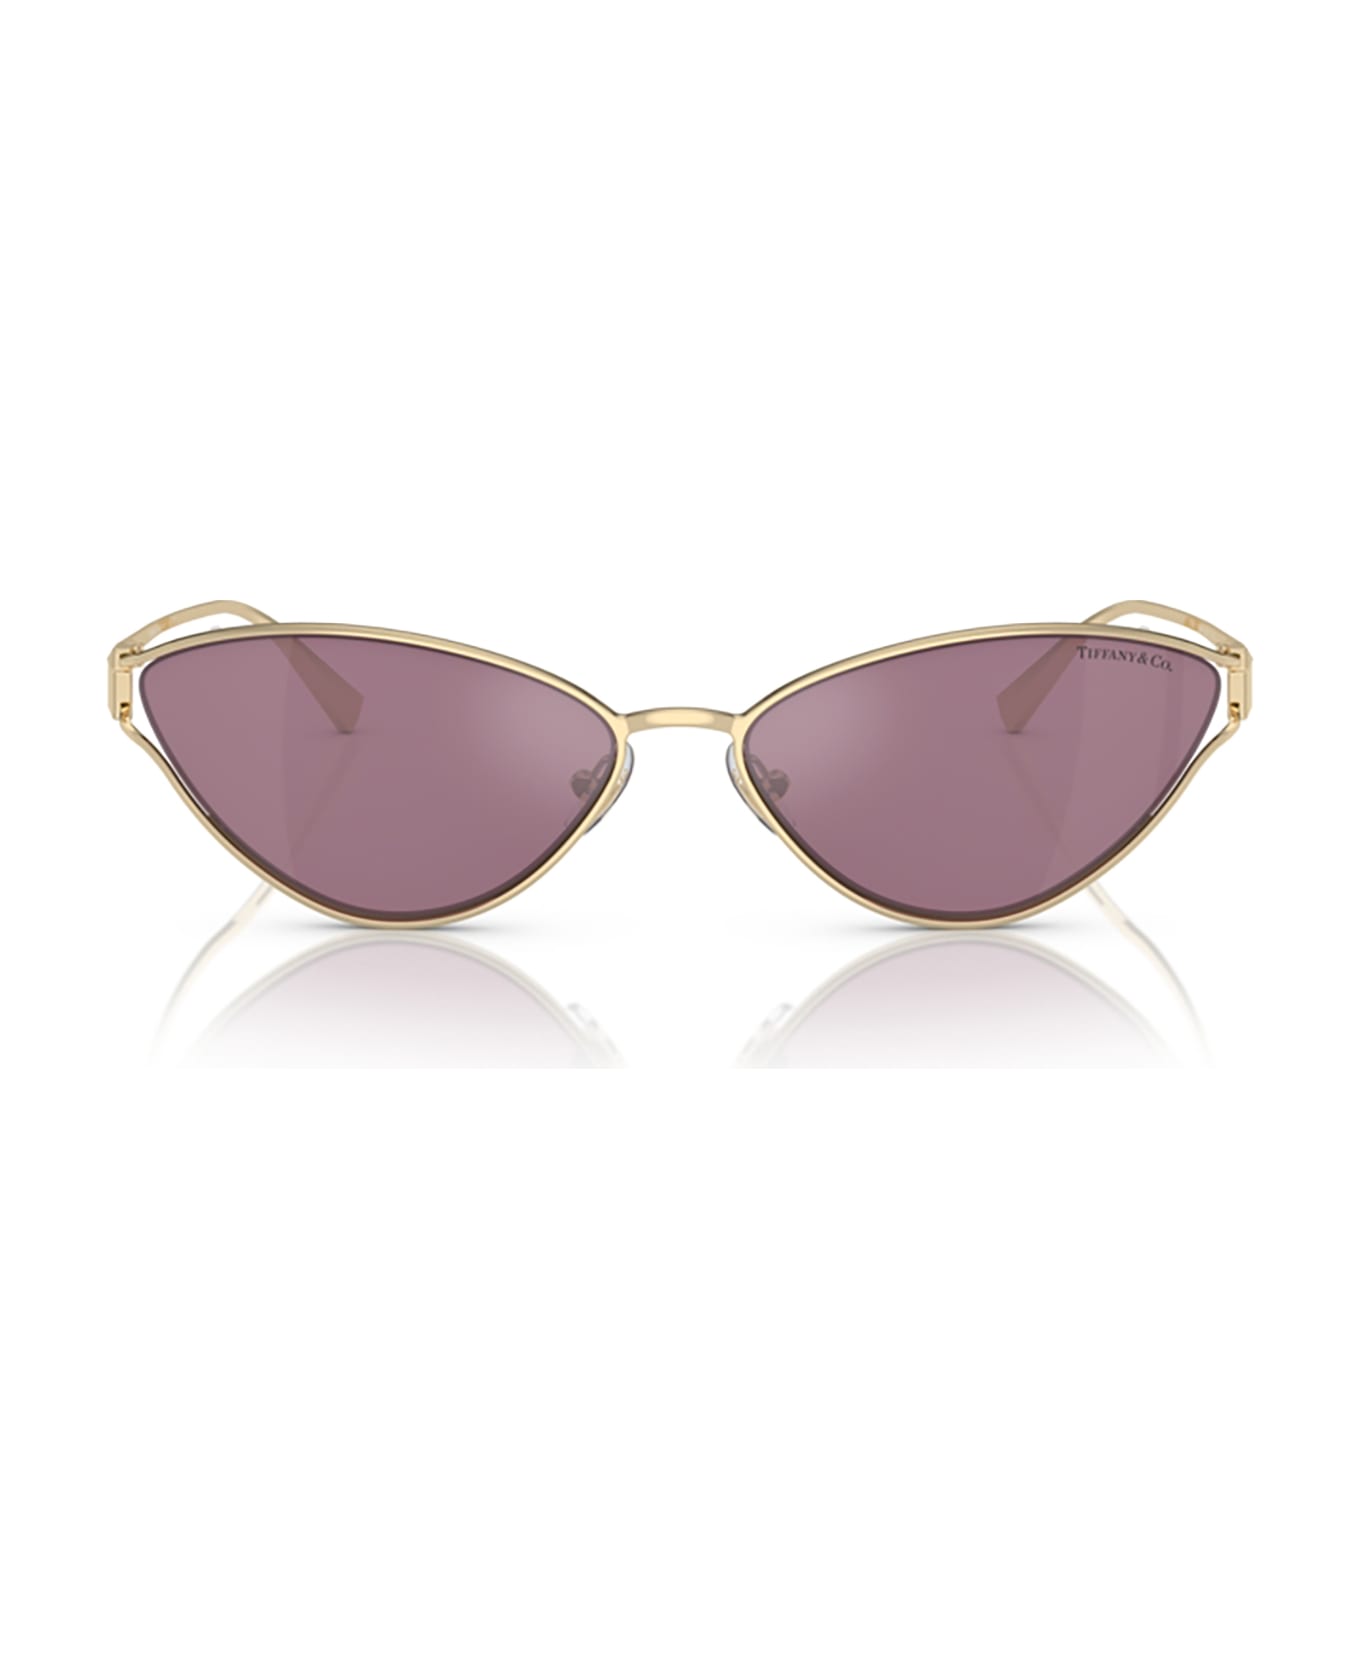 Tiffany & Co. Tf3095 Pale Gold Sunglasses - Pale Gold